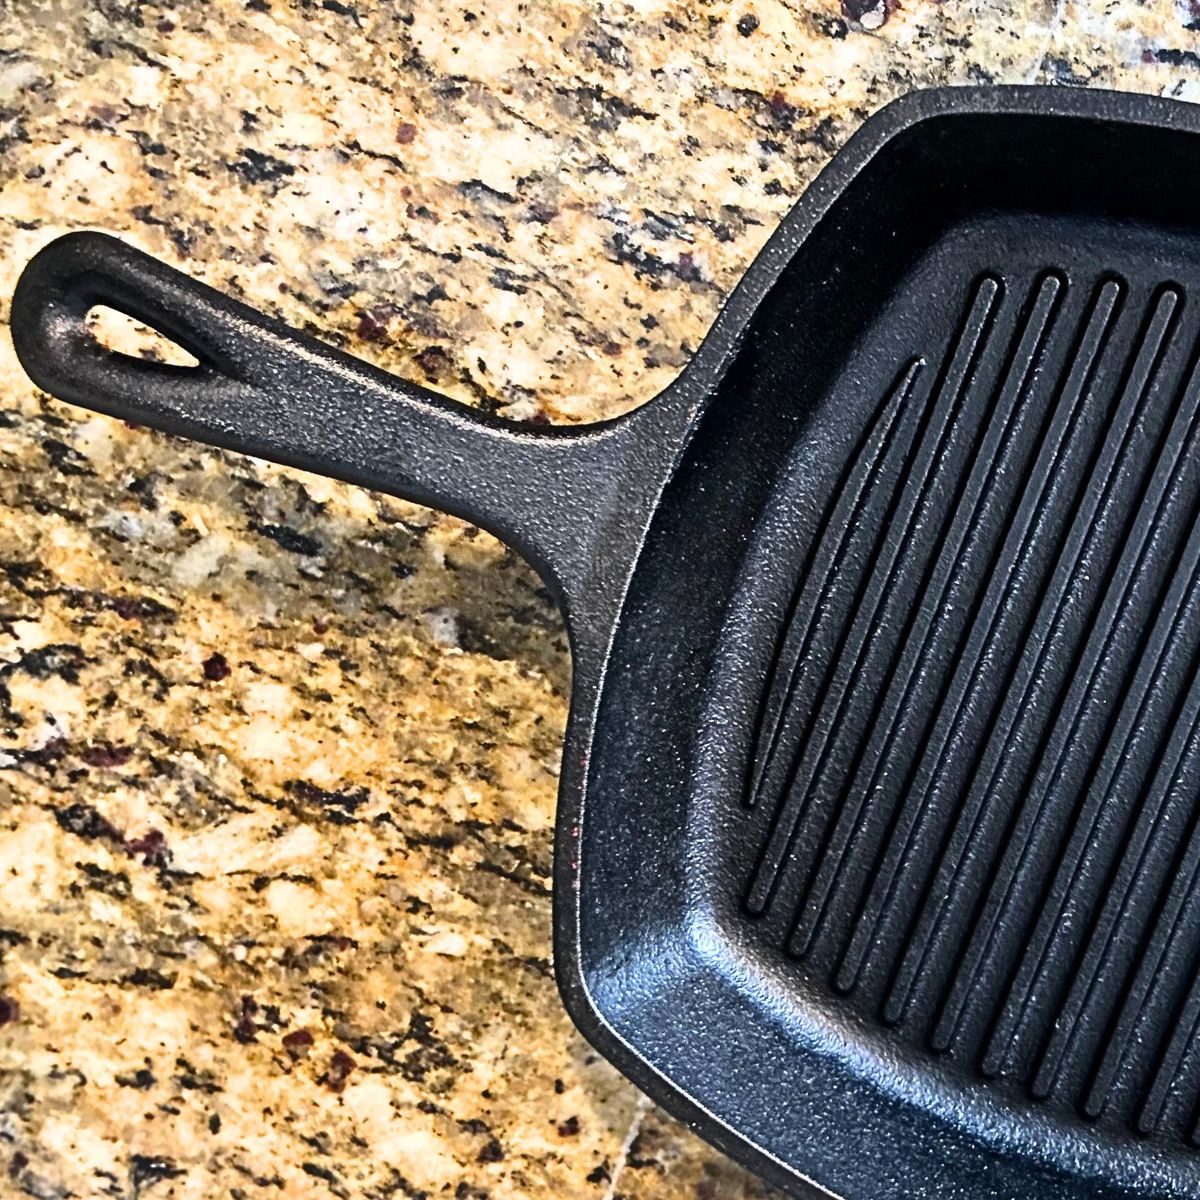 clean cast iron pan